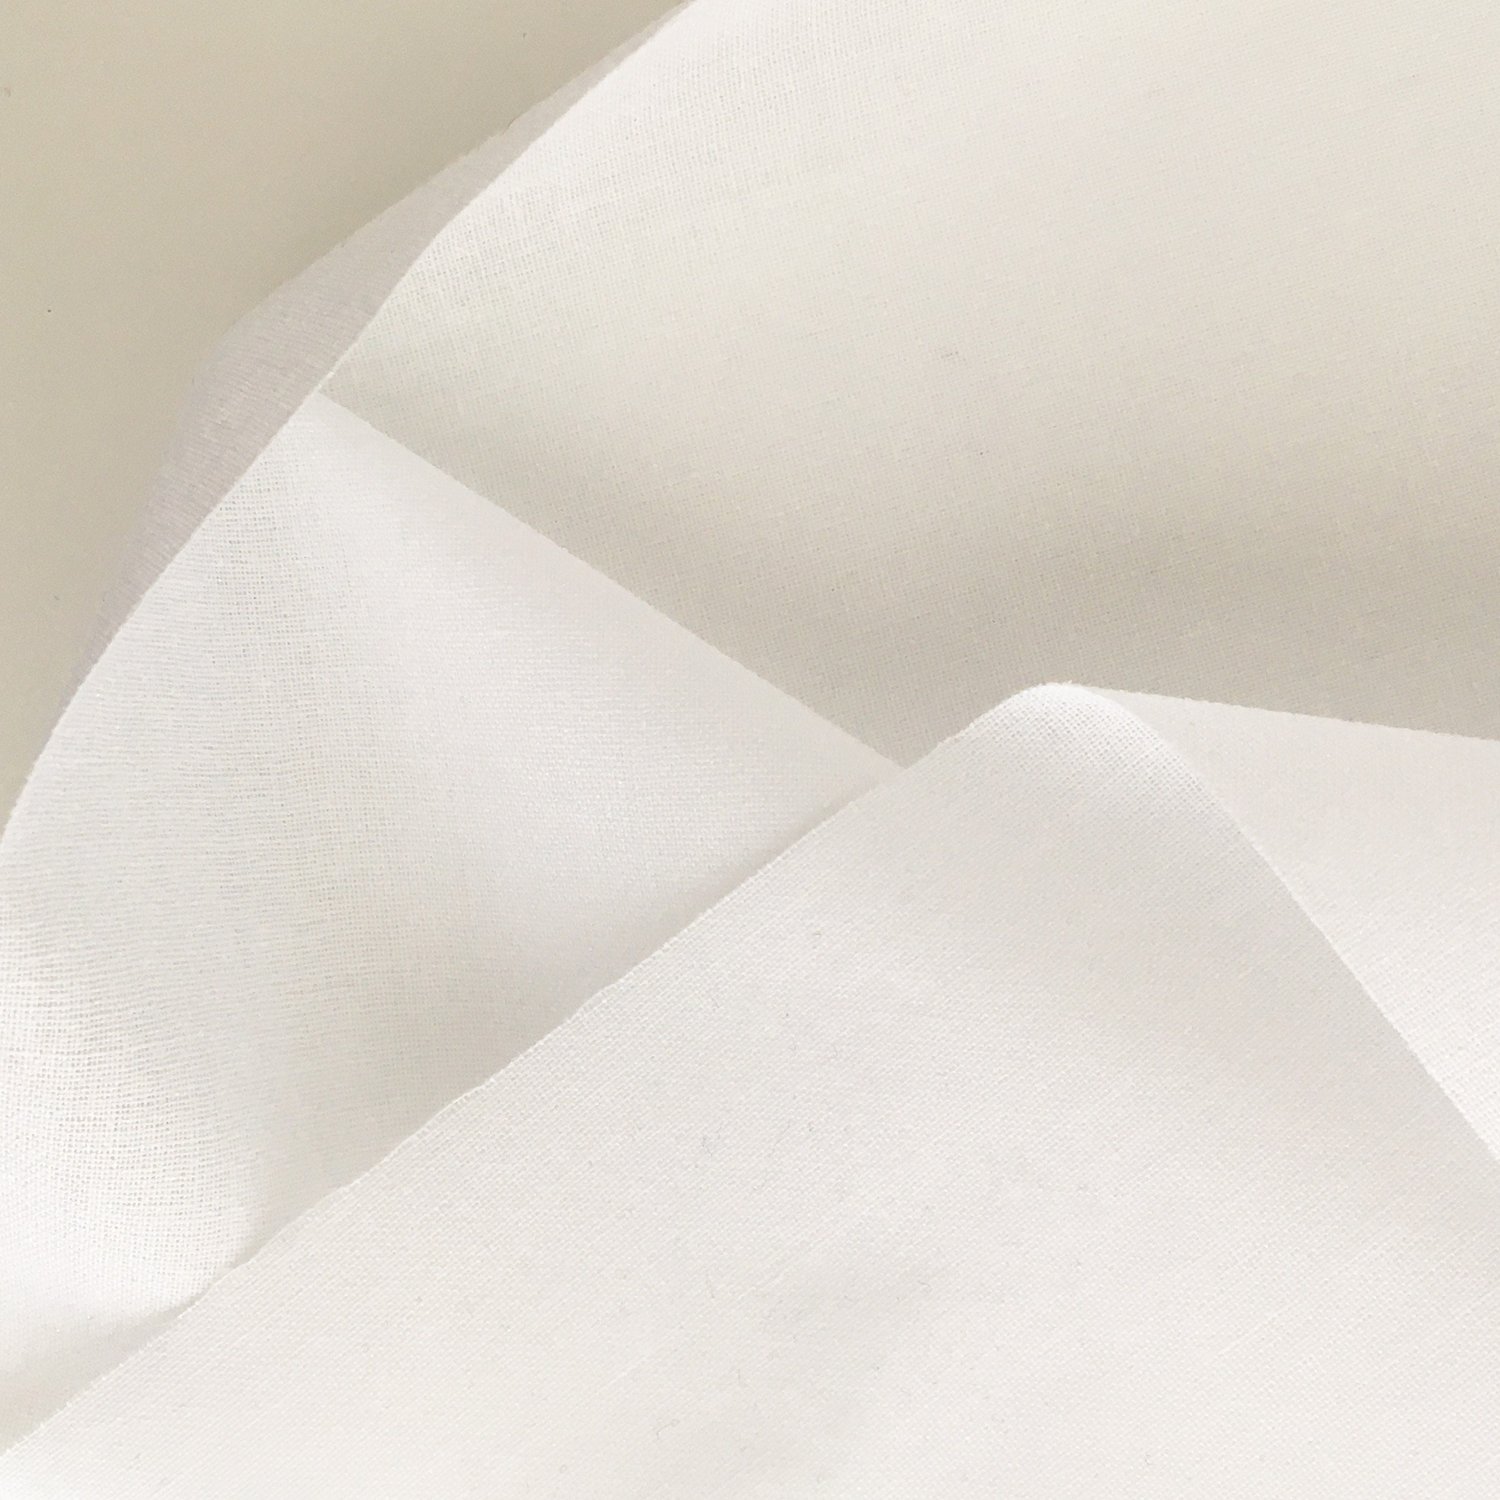  Pellon Shape Flex Woven Cotton White Fusible Interfacing SF101  20 By The Yard